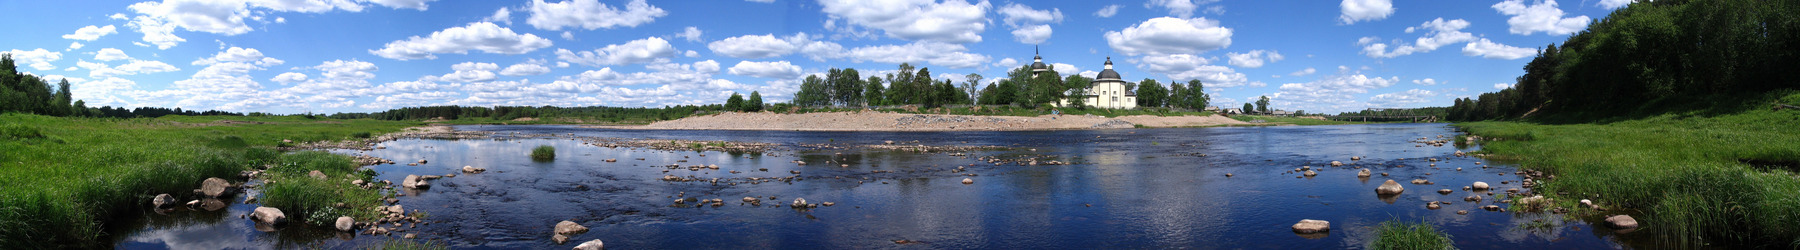 Beautiful scene of river Vazhinka (прекрасный пейзаж реки Важинки)